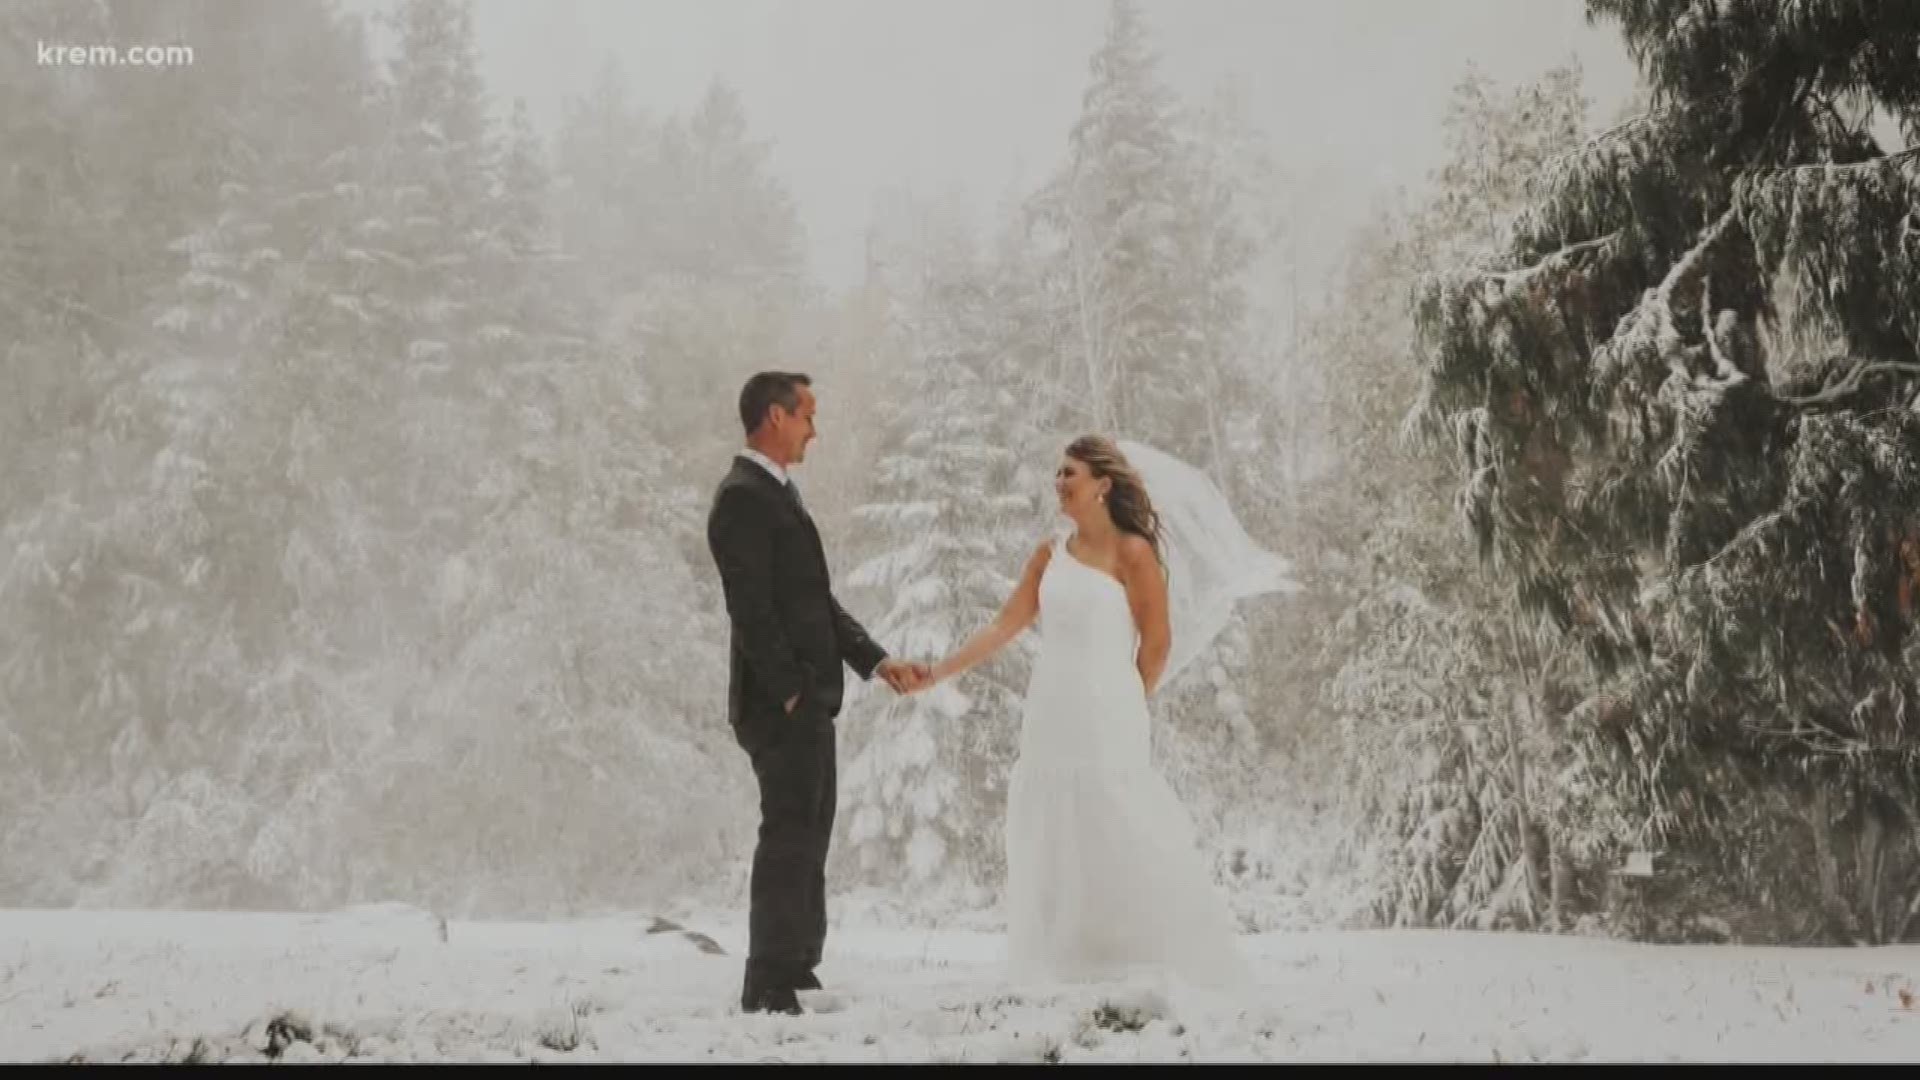 Northwest snowstorm makes beautiful wedding backdrops | 0